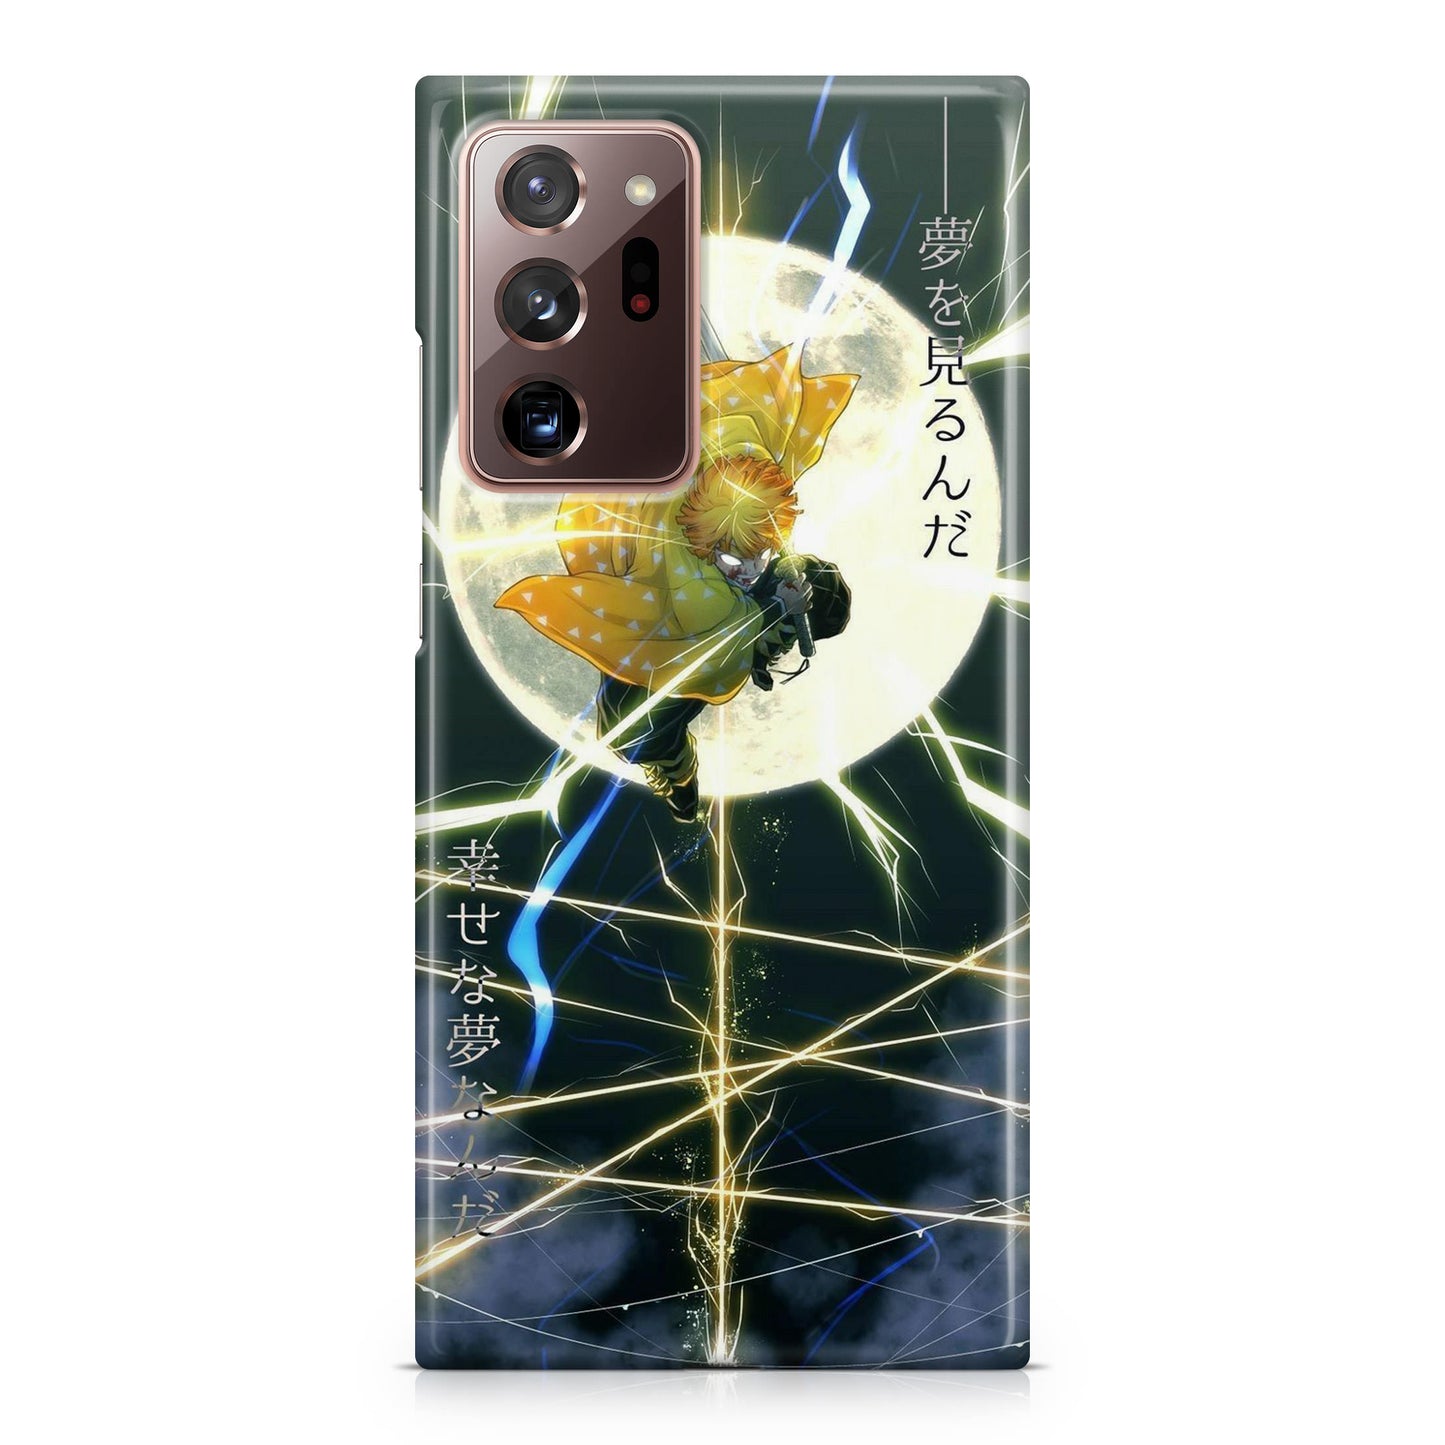 Zenittsu Galaxy Note 20 Ultra Case